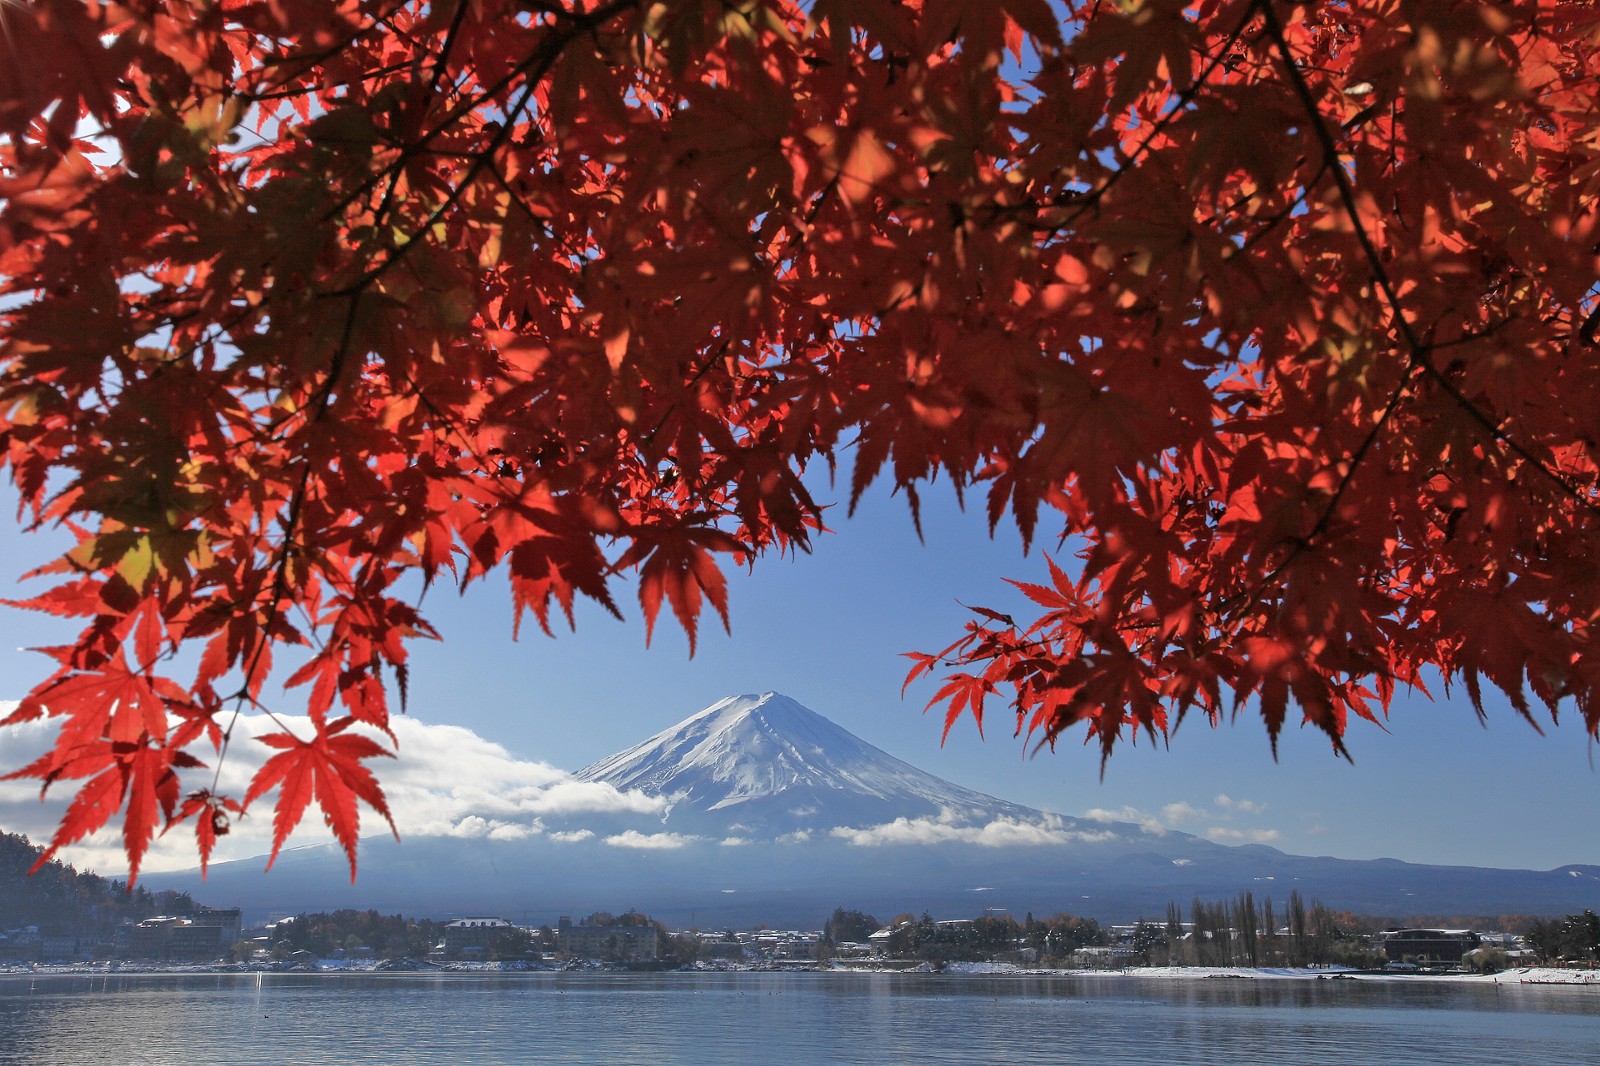 Mt Fuji and red maple leaves at Lake Kawaguchiko